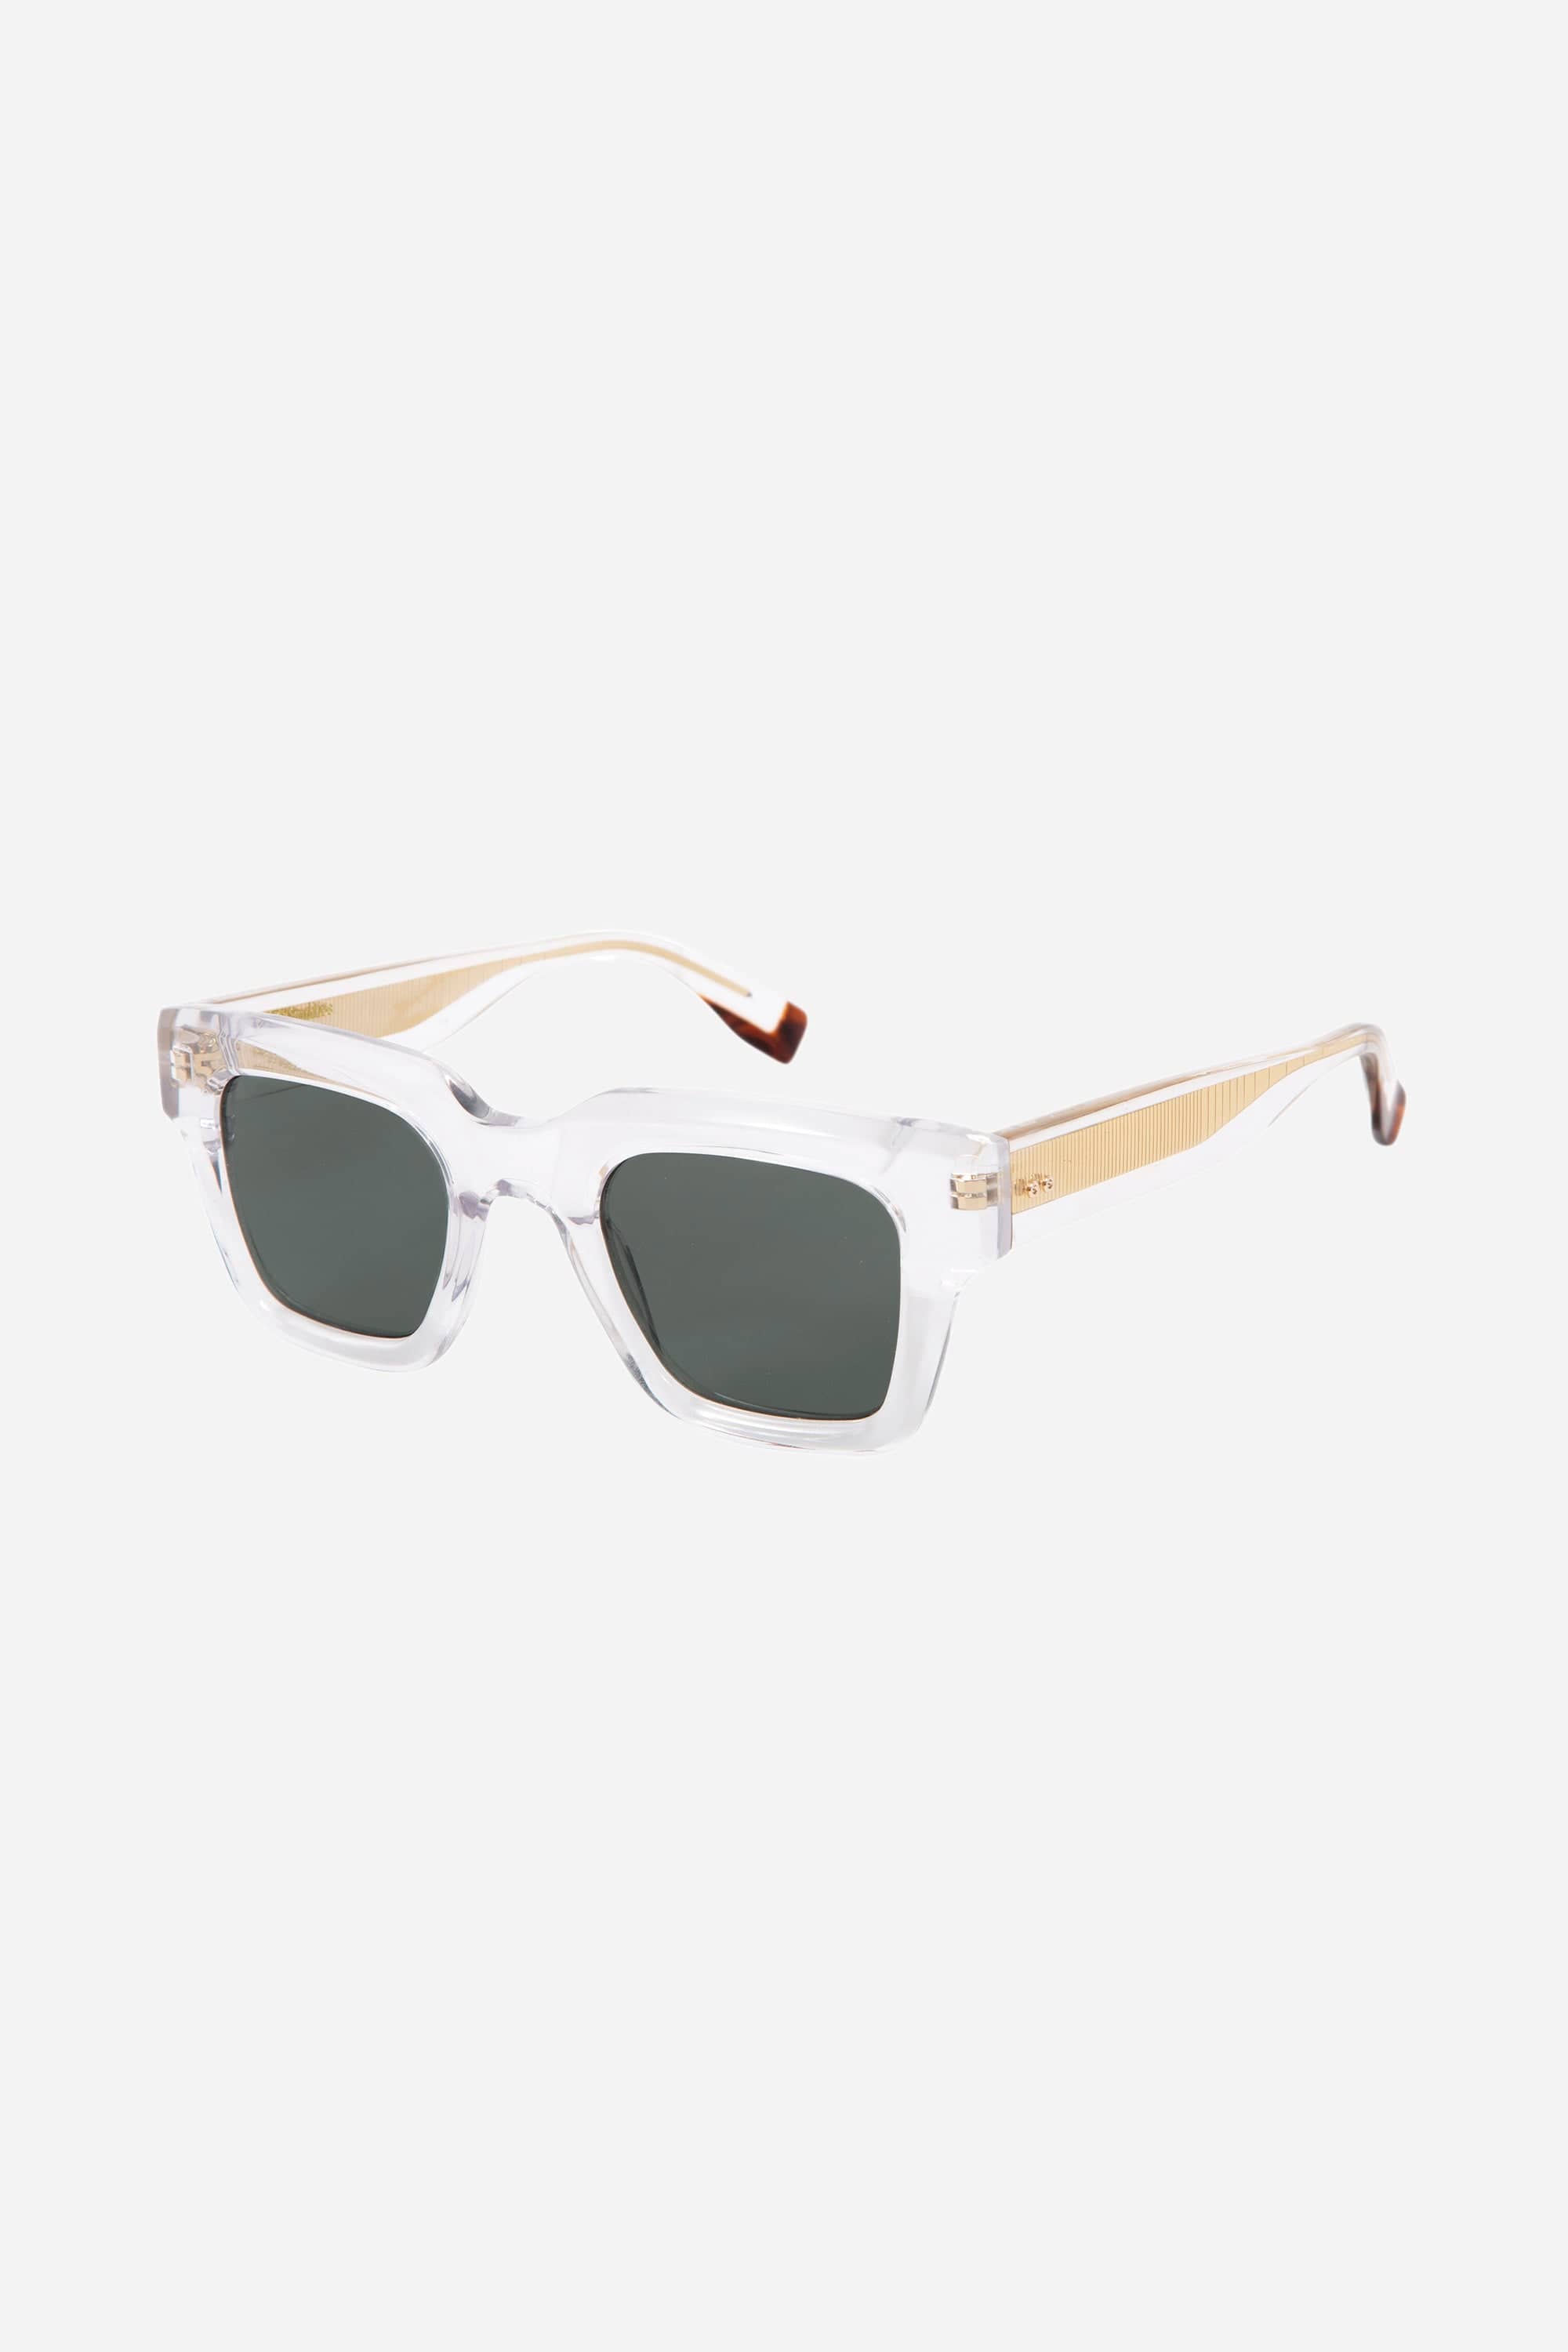 Gigi Studios squared crystal and green sunglasses - Eyewear Club